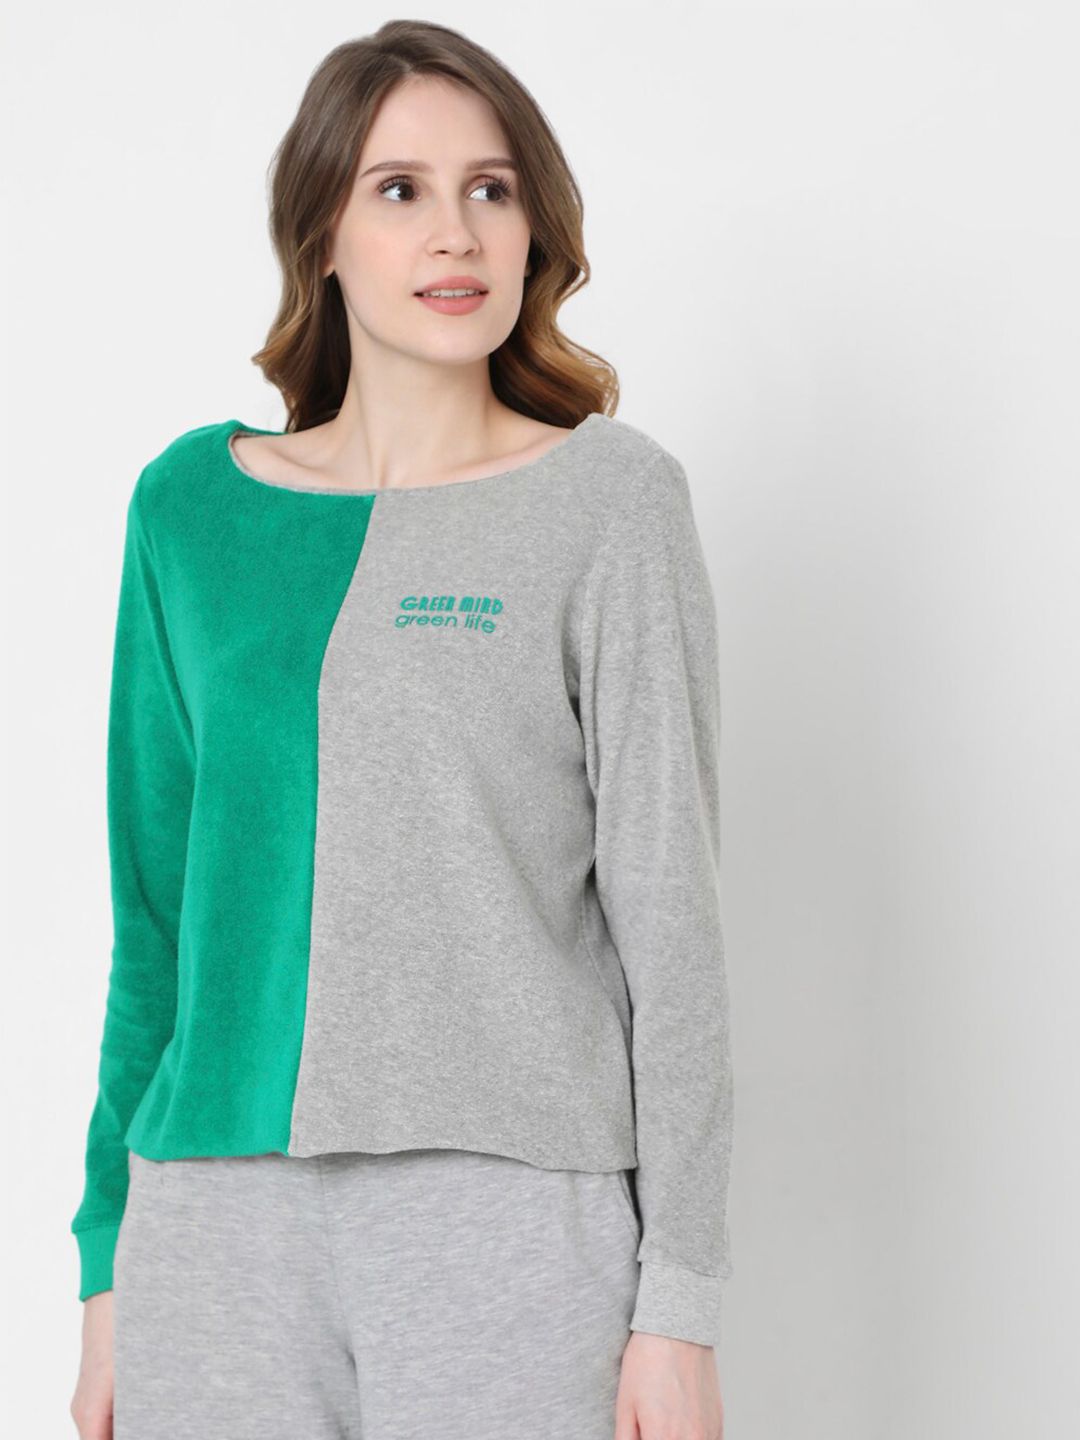 Vero Moda Women Grey & Green Colourblocked Sweatshirt Price in India